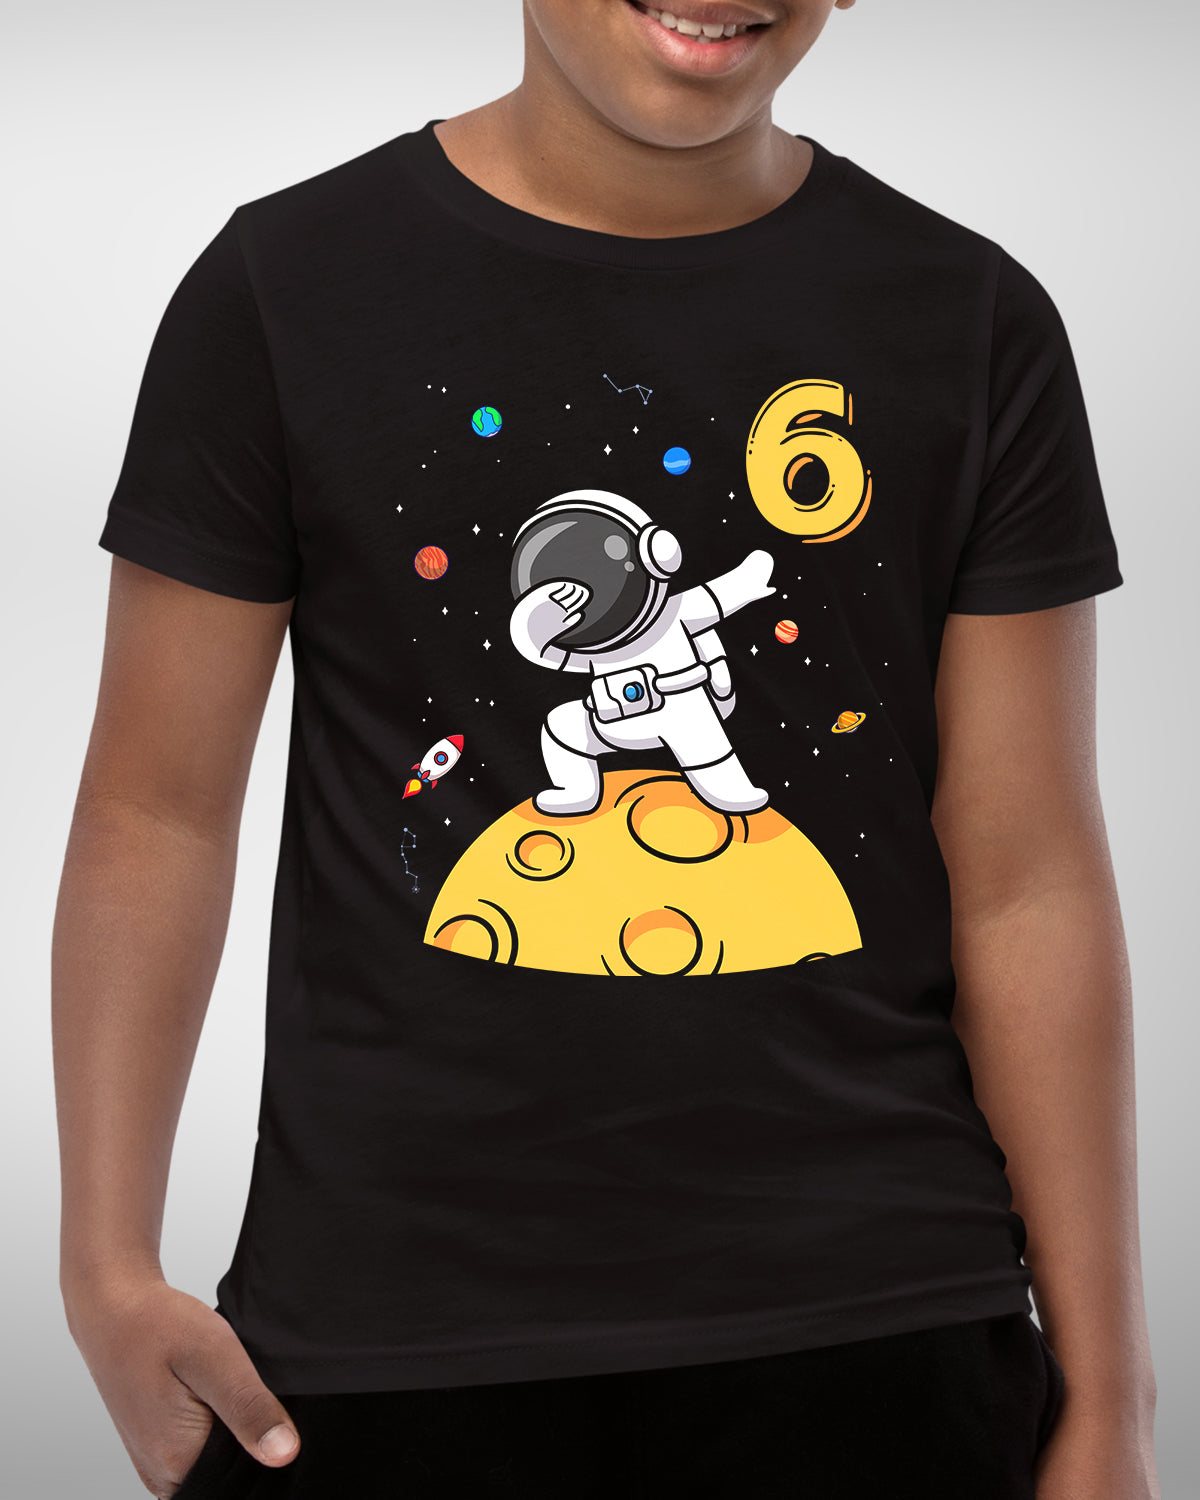 6th Birthday Dabbing Astronaut Shirt - 6th Bday Galaxy Party - Space Theme Tee